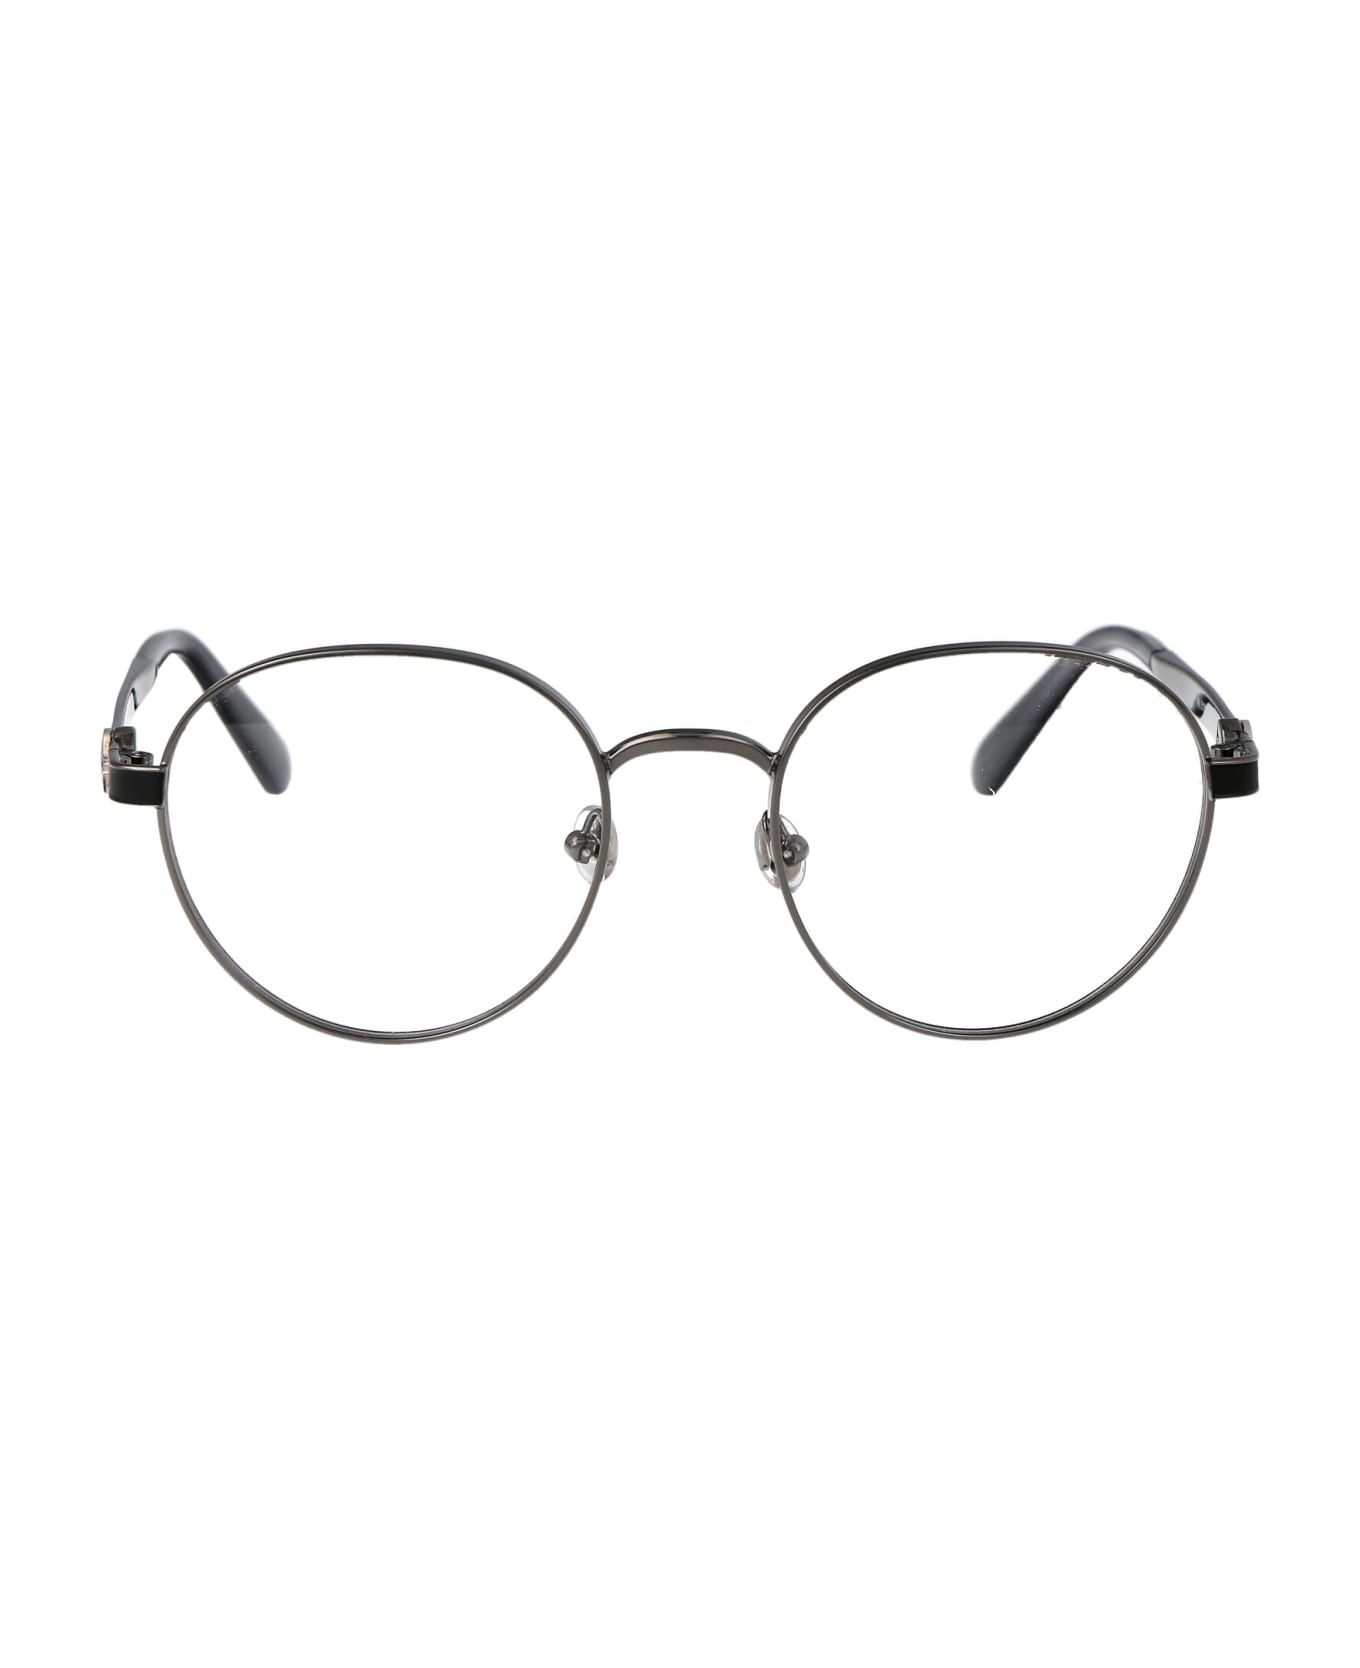 Moncler Eyewear Ml5179 Glasses - 008 Antracite Lucido アイウェア